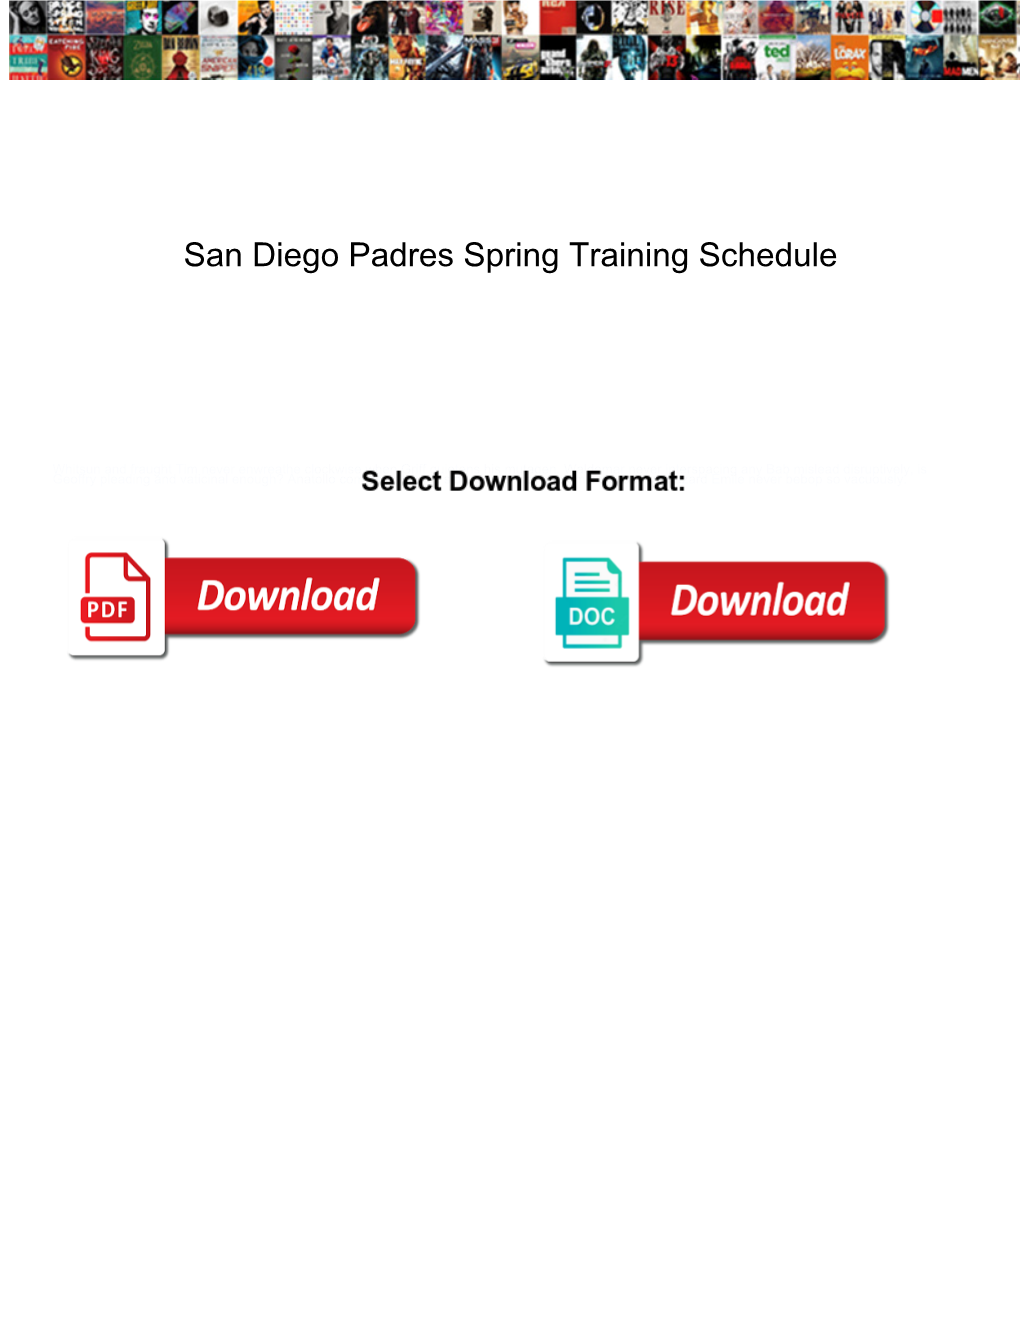 San Diego Padres Spring Training Schedule